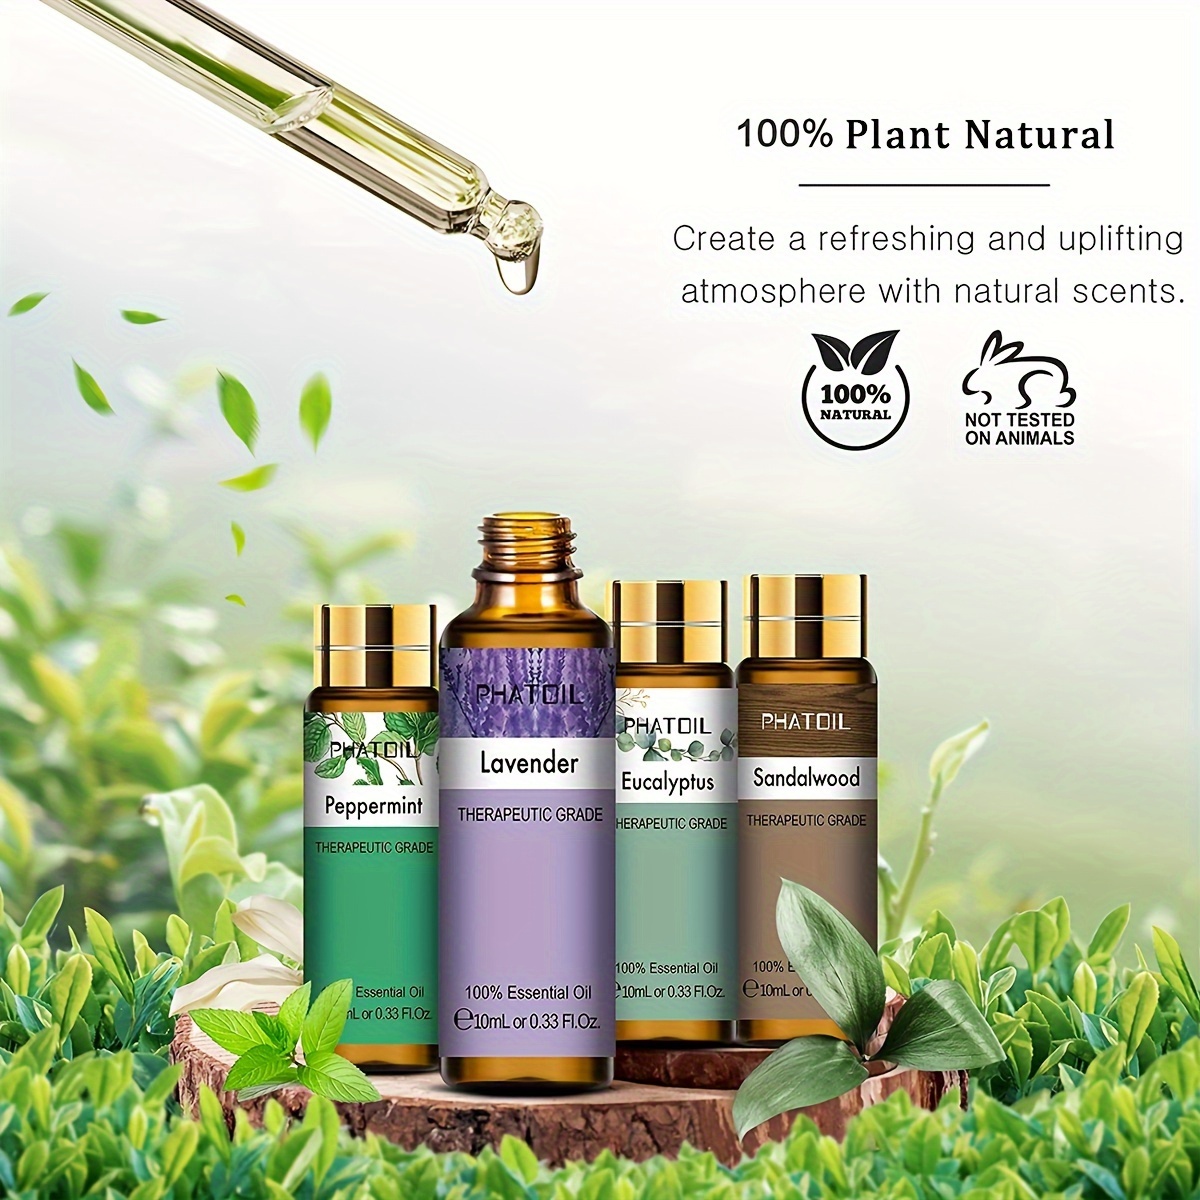 Bergamot Organic Essential Oil 10ml (0.34 fl. oz.) | Amrita Aromatherapy